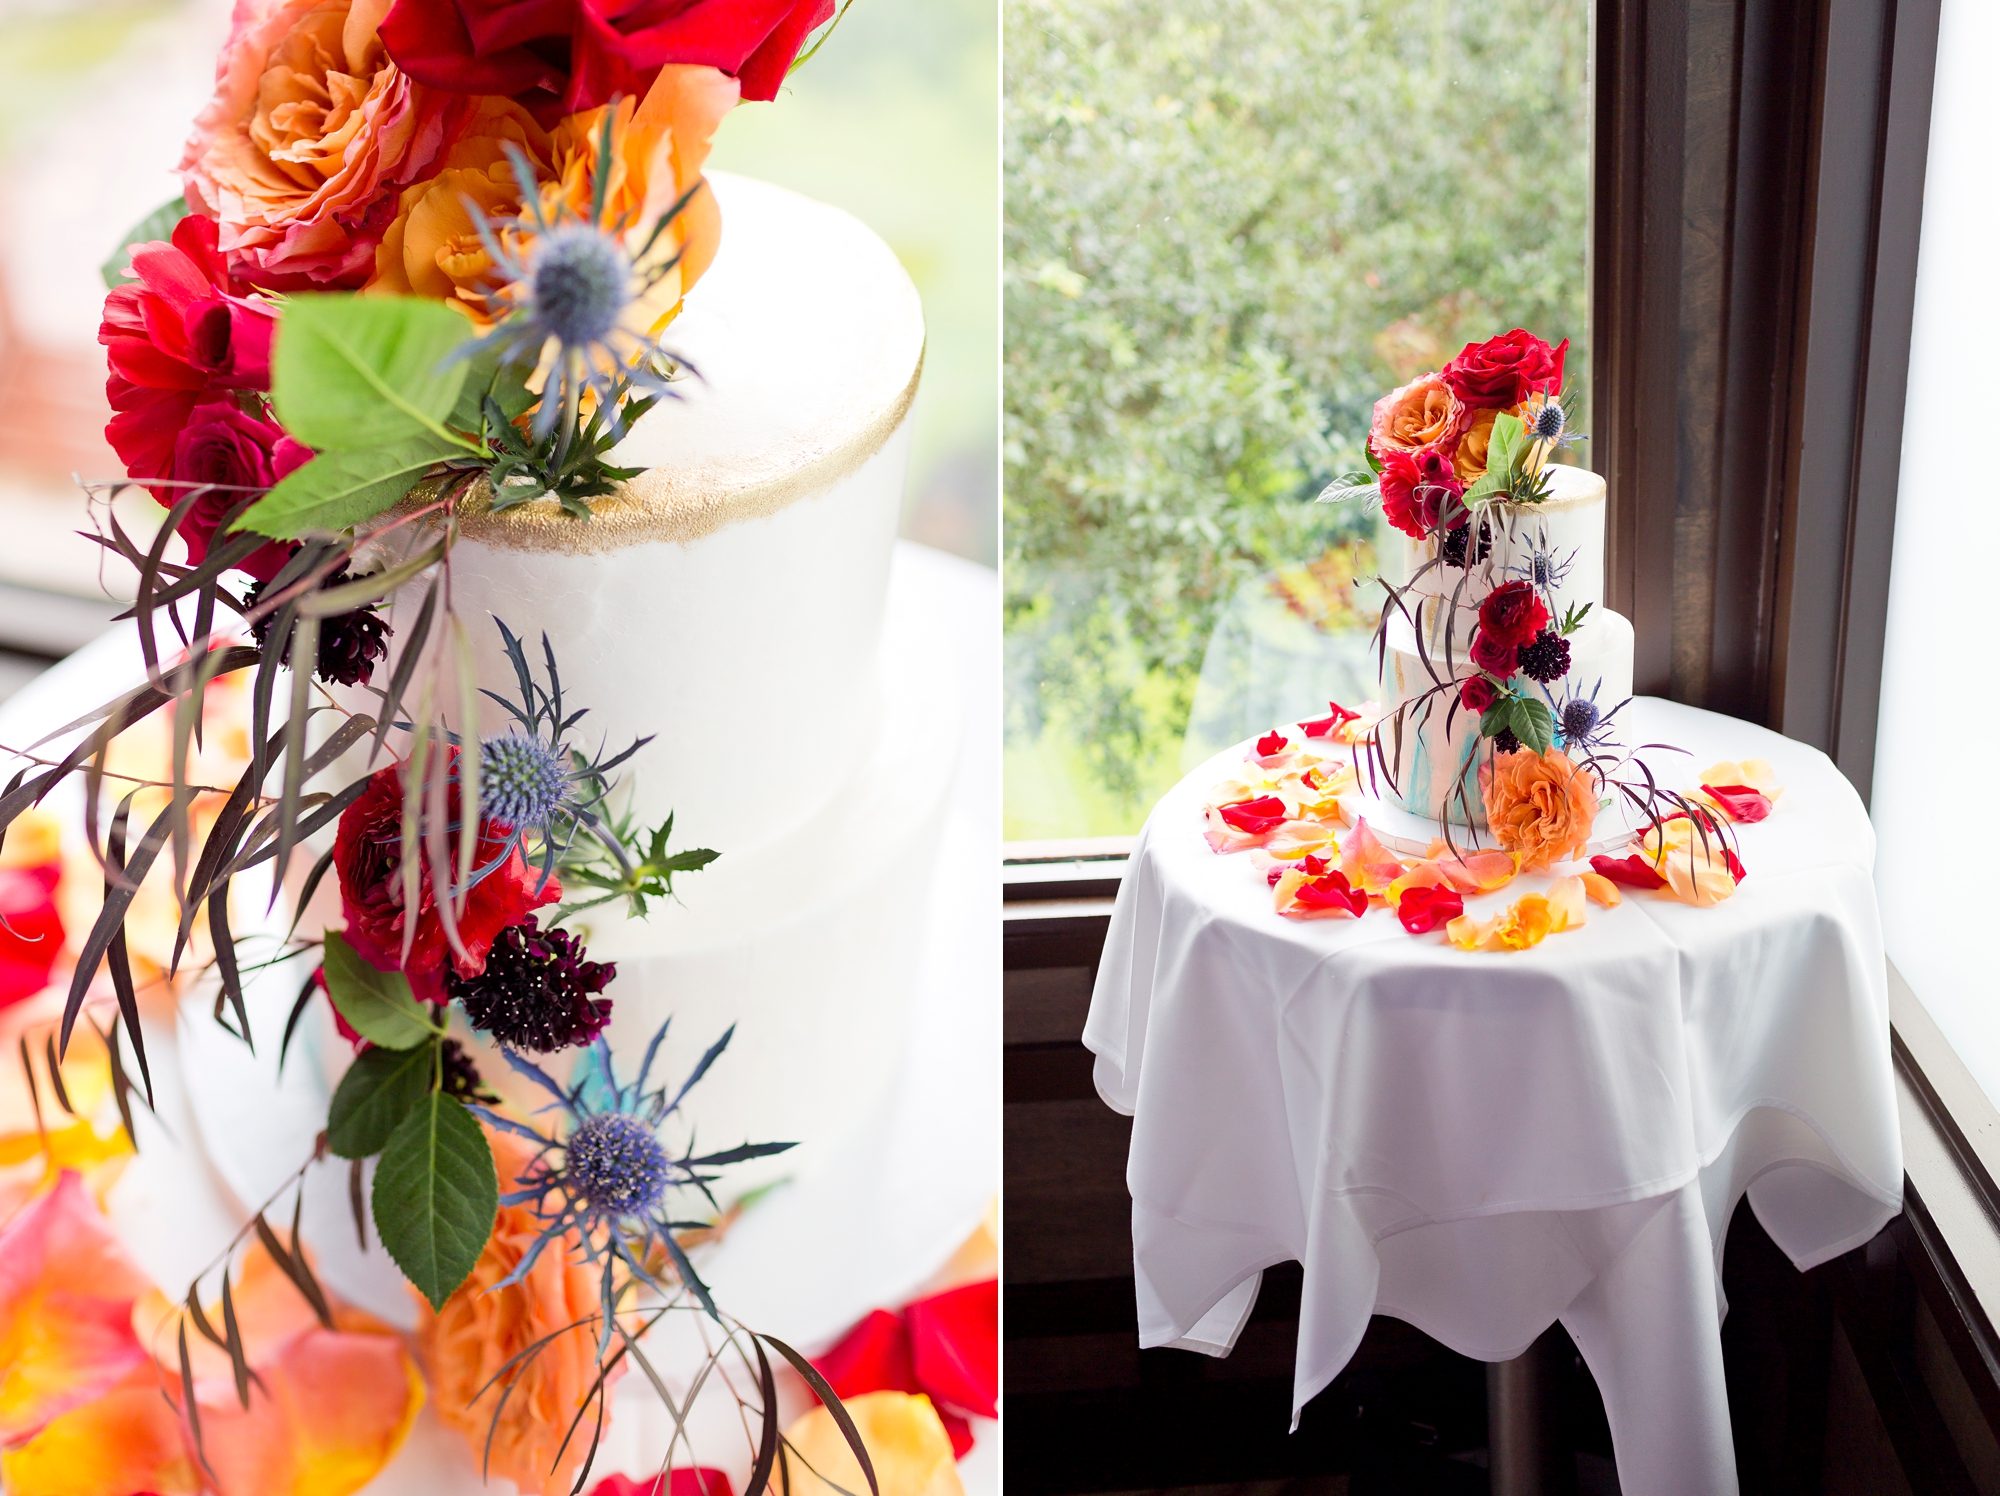 2 tier round wedding cake with jewel toned flowers